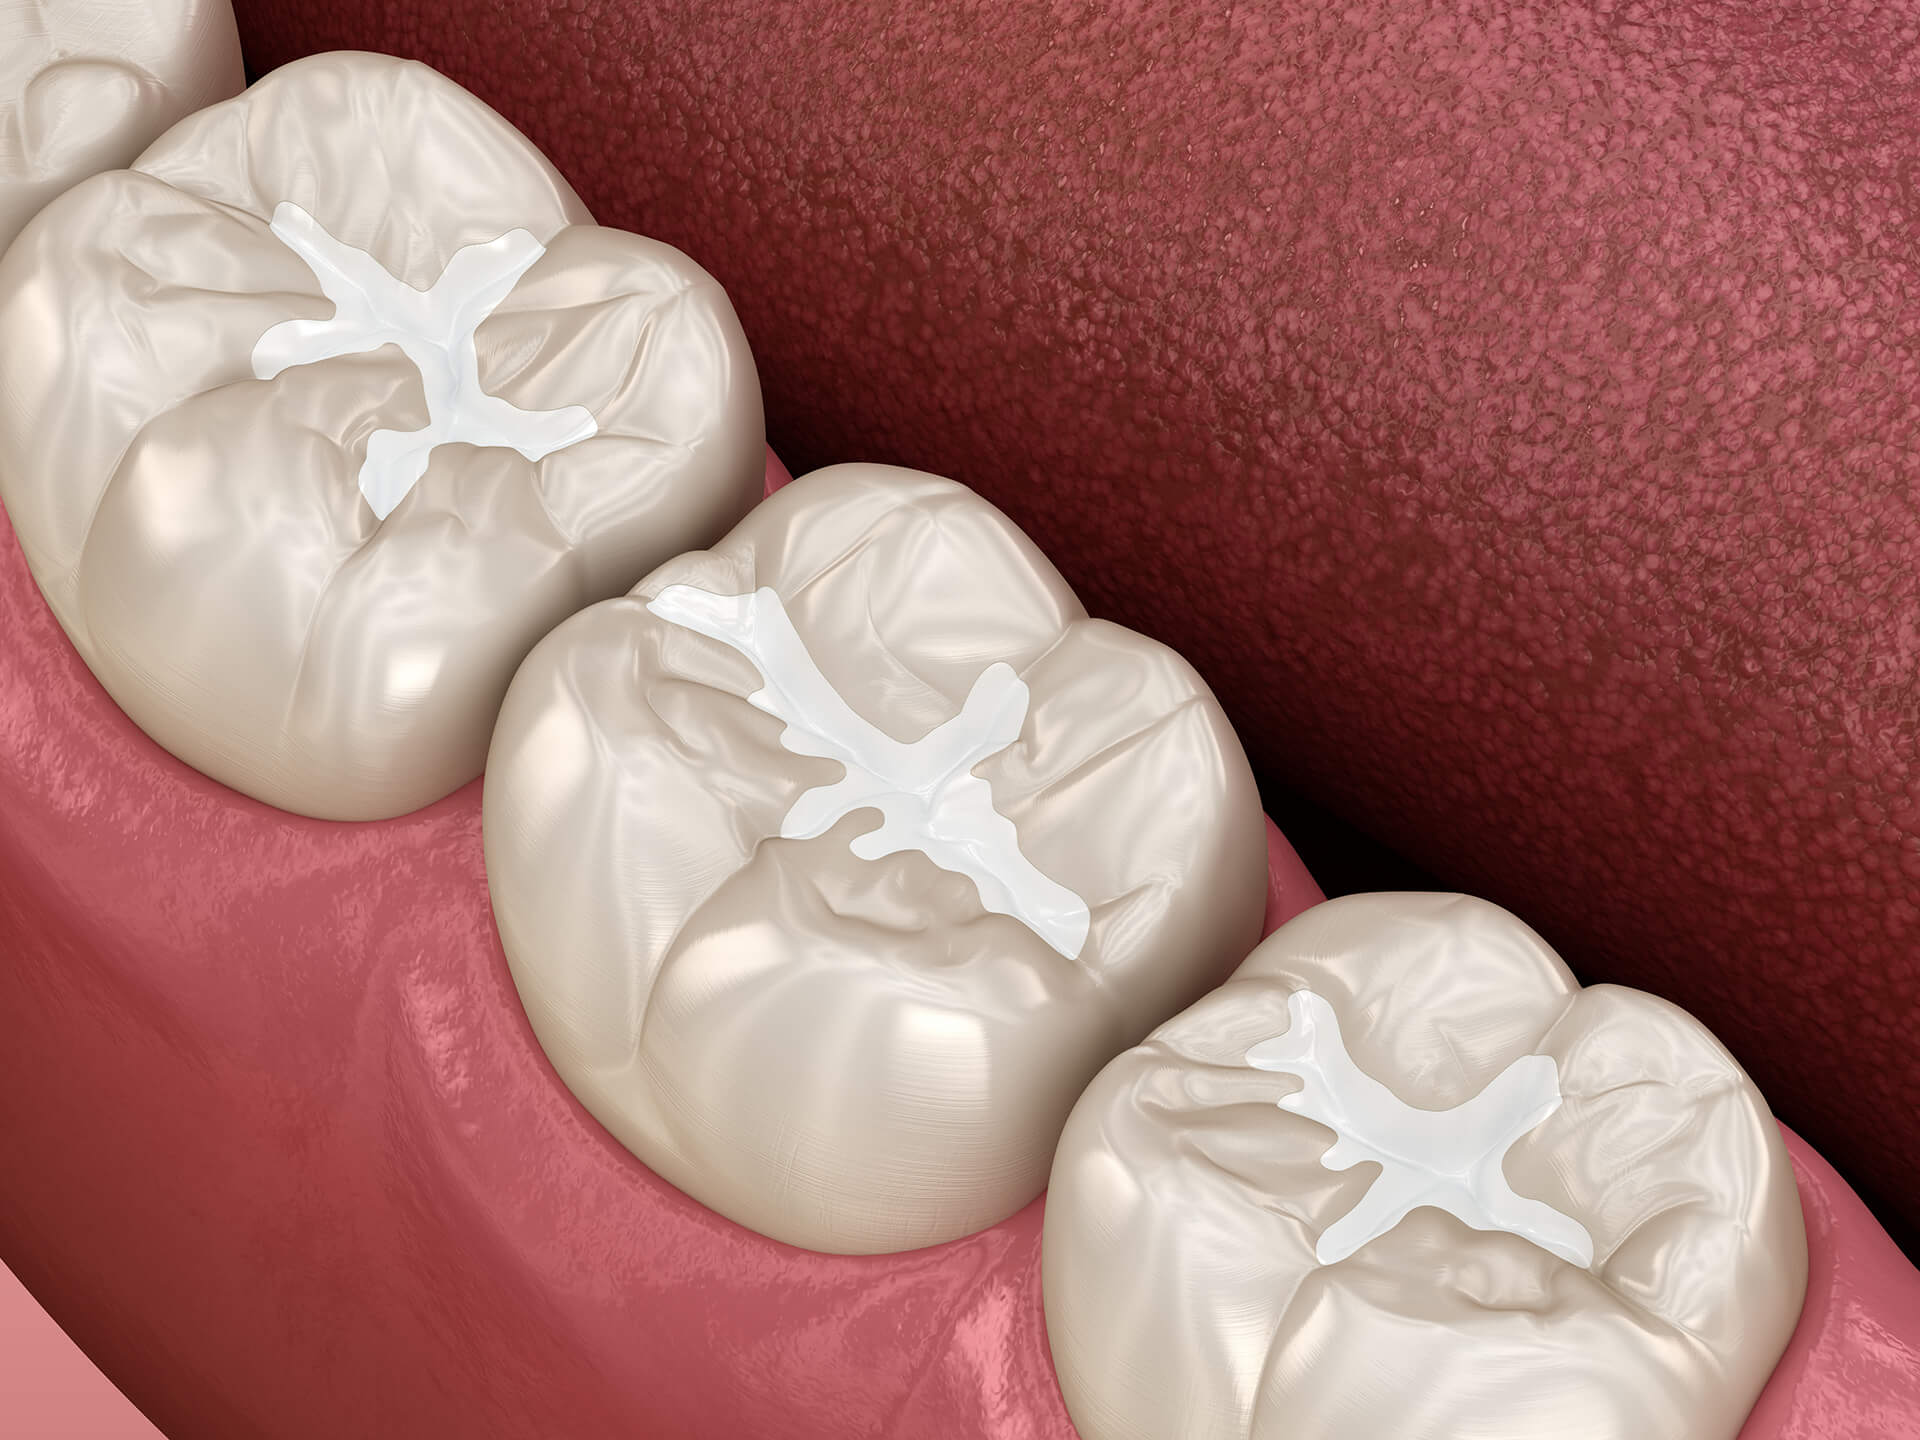 image of fillings on teeth